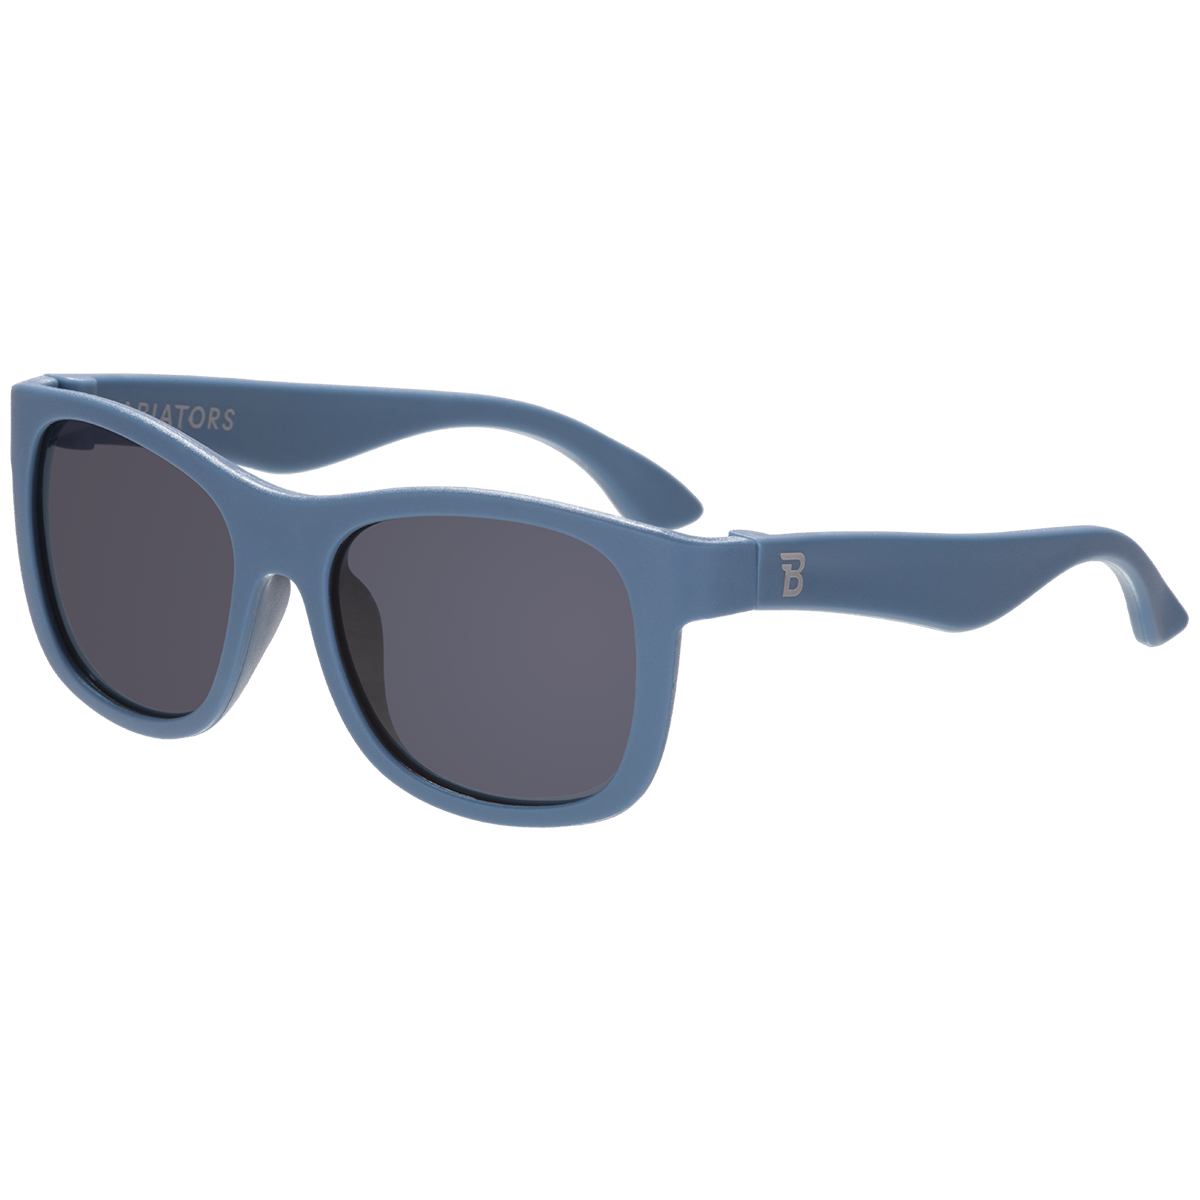 Babiators - Navigator Sunglasses in Pacific Blue: Ages 6+